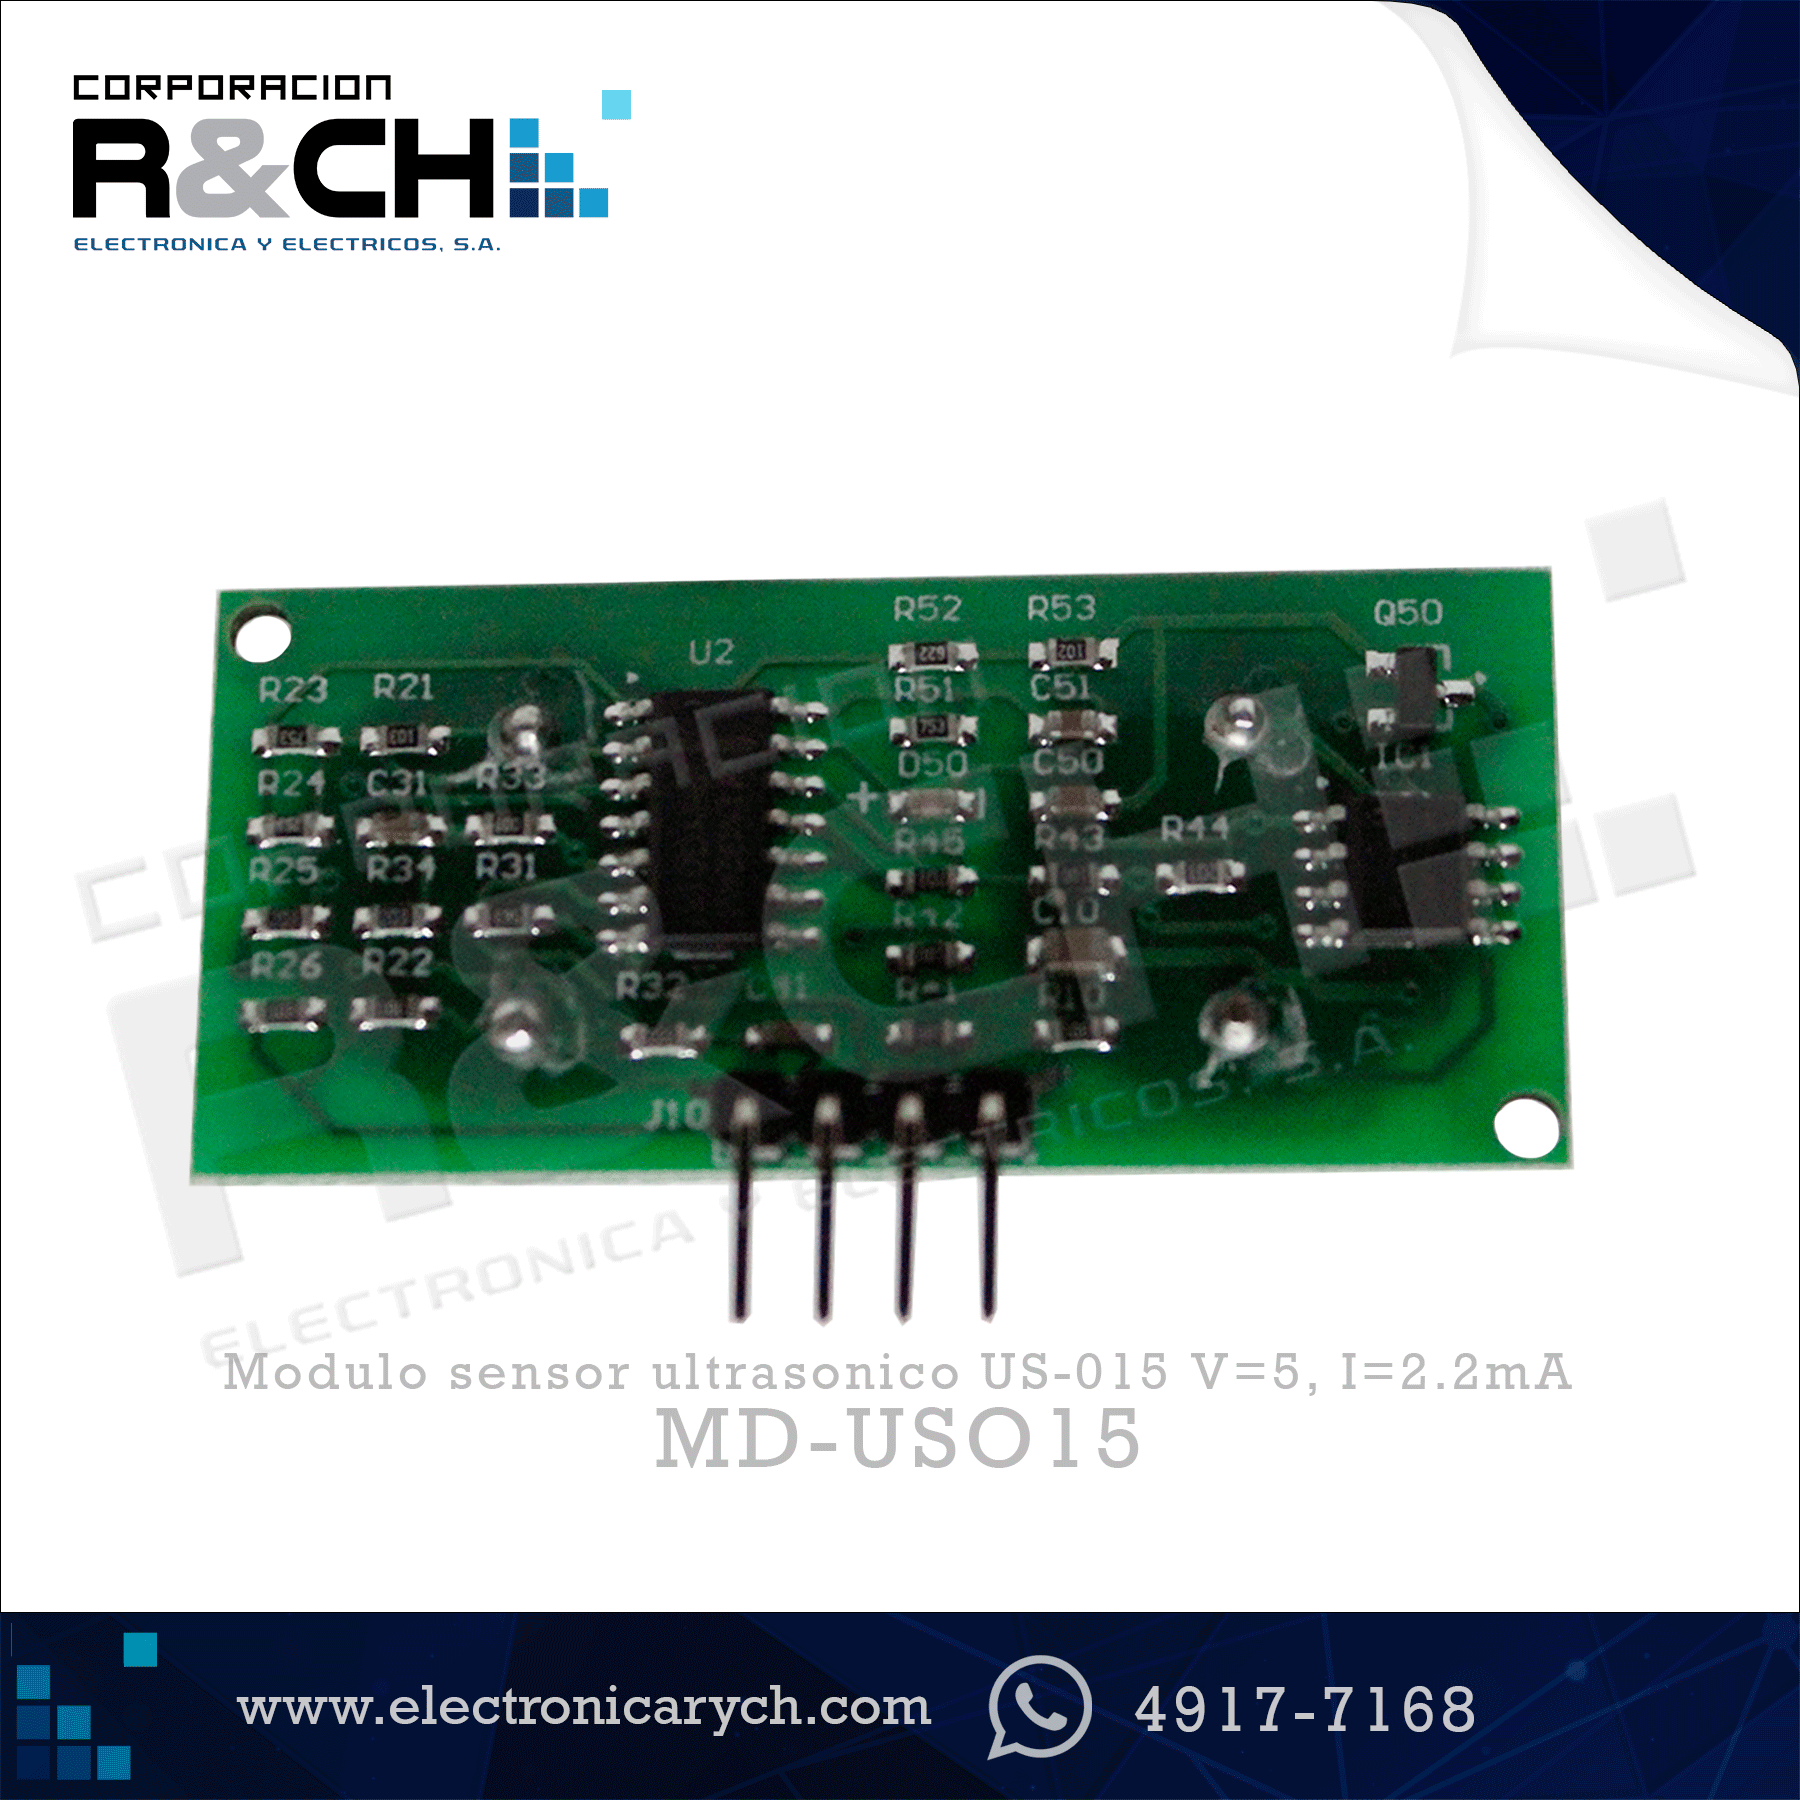 MD-US015 modulo sensor ultrasonico US-015 V=5, I=2.2mA